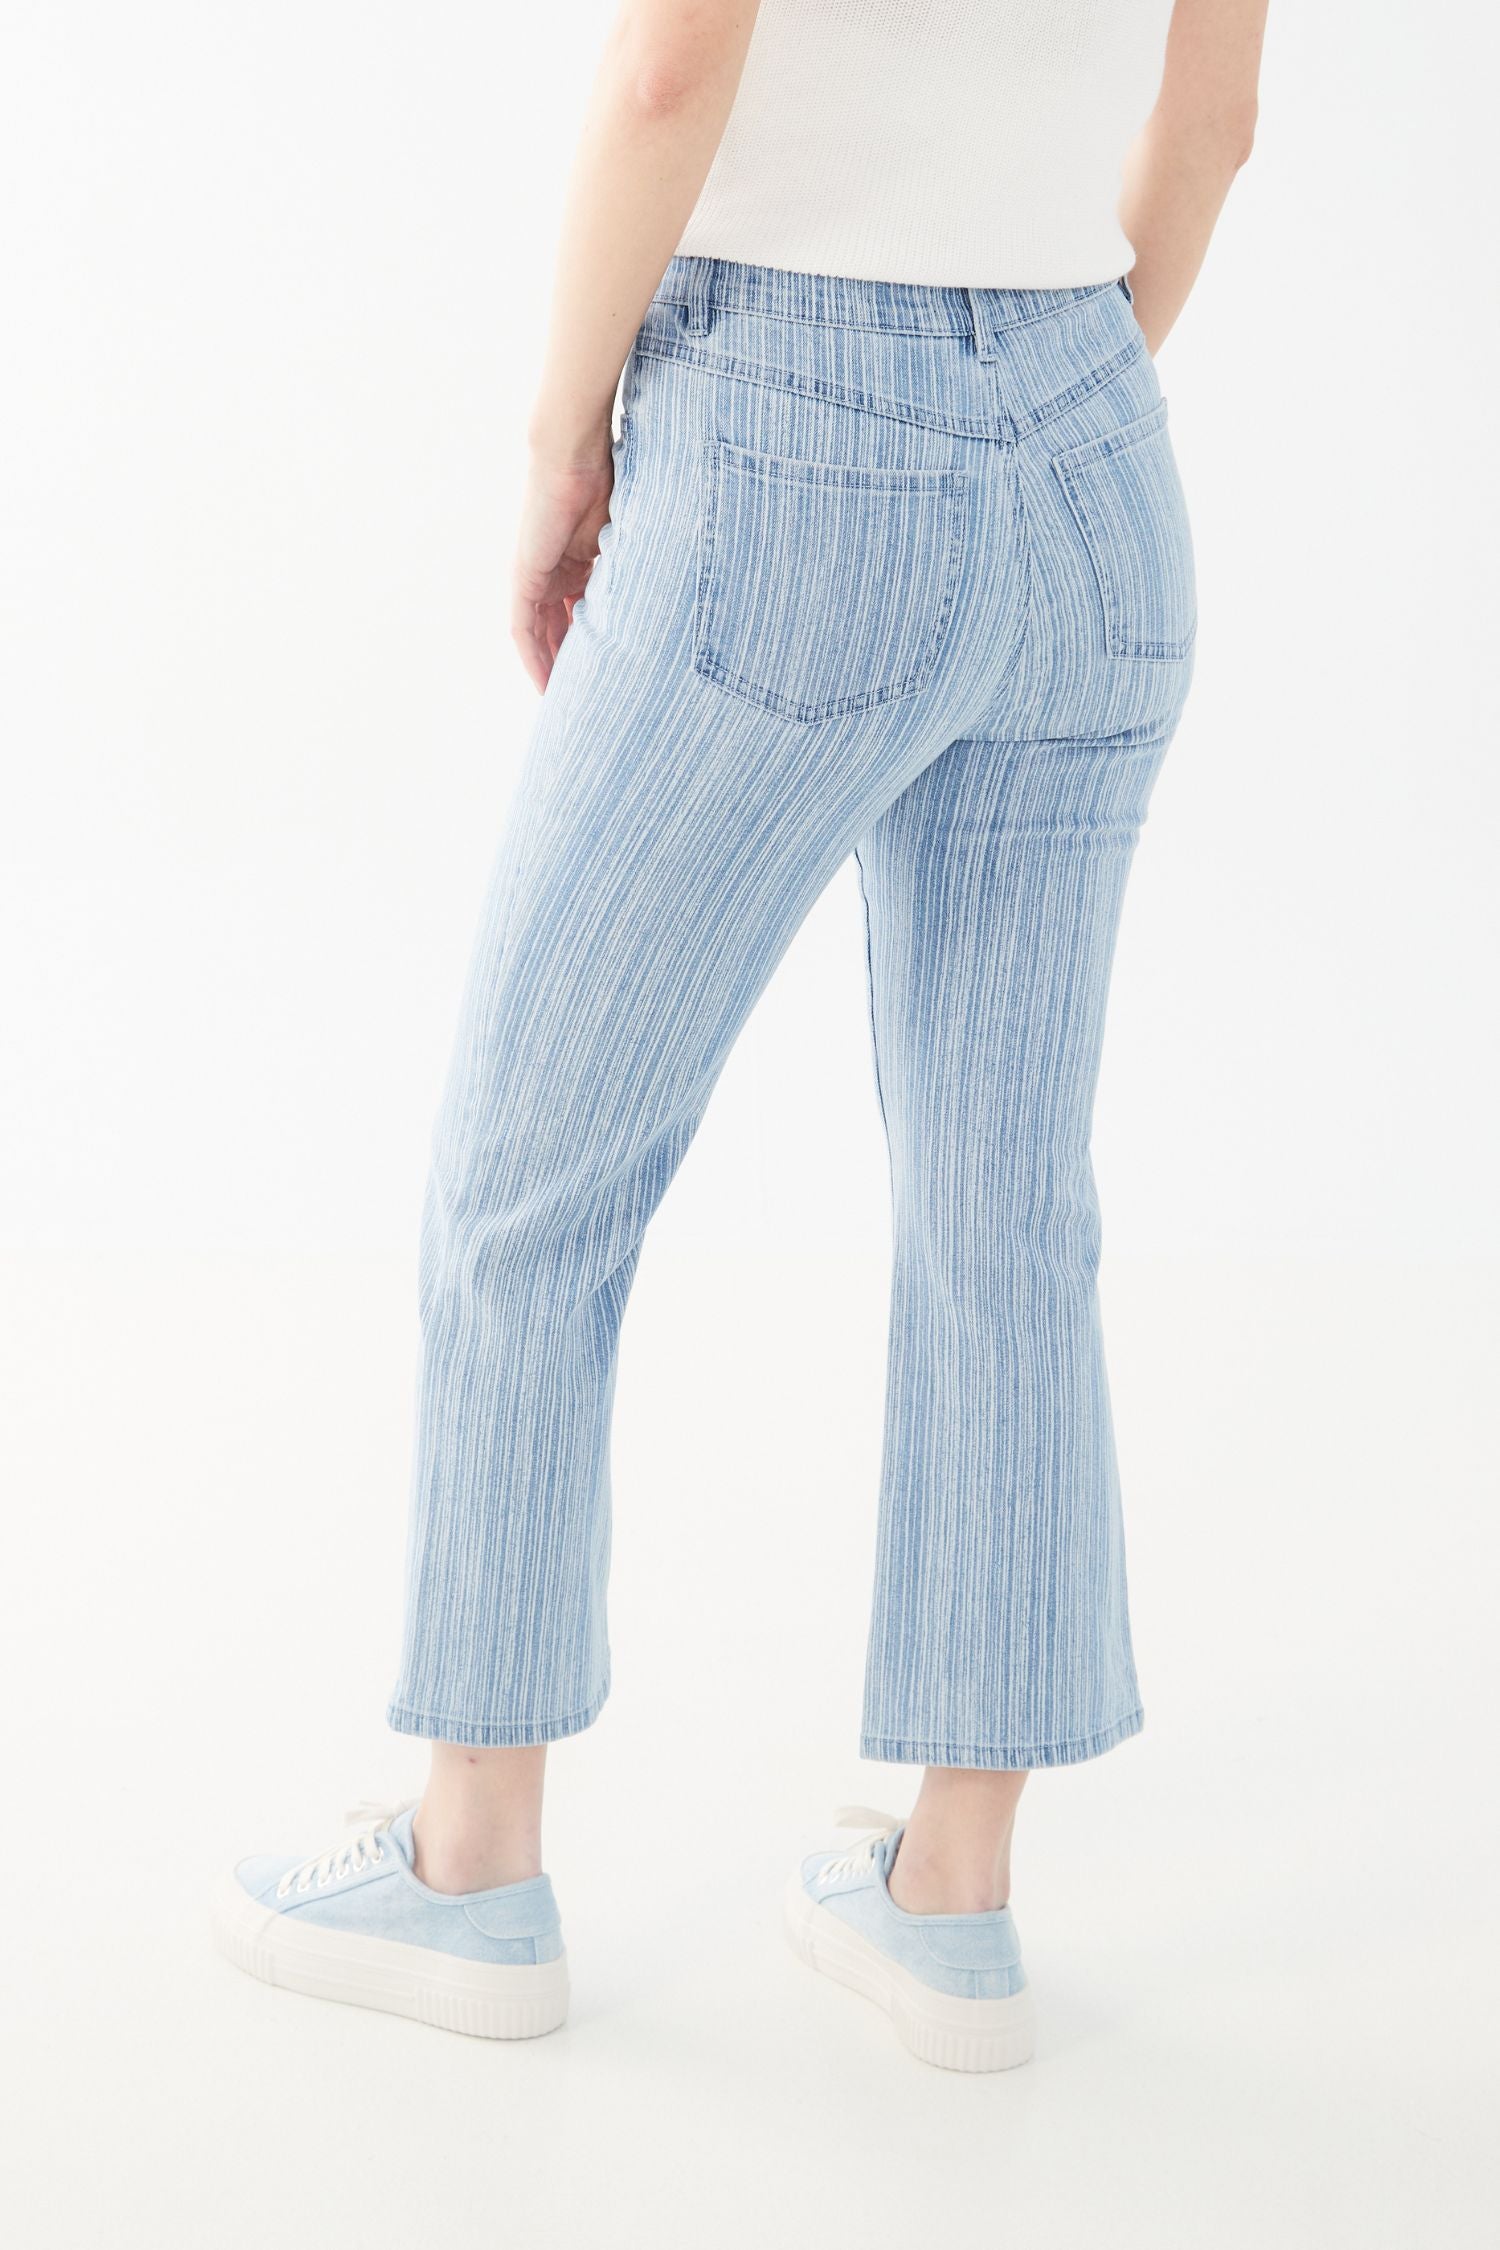 FDJ Suzanne Crop Jeans - Style 6860779, back